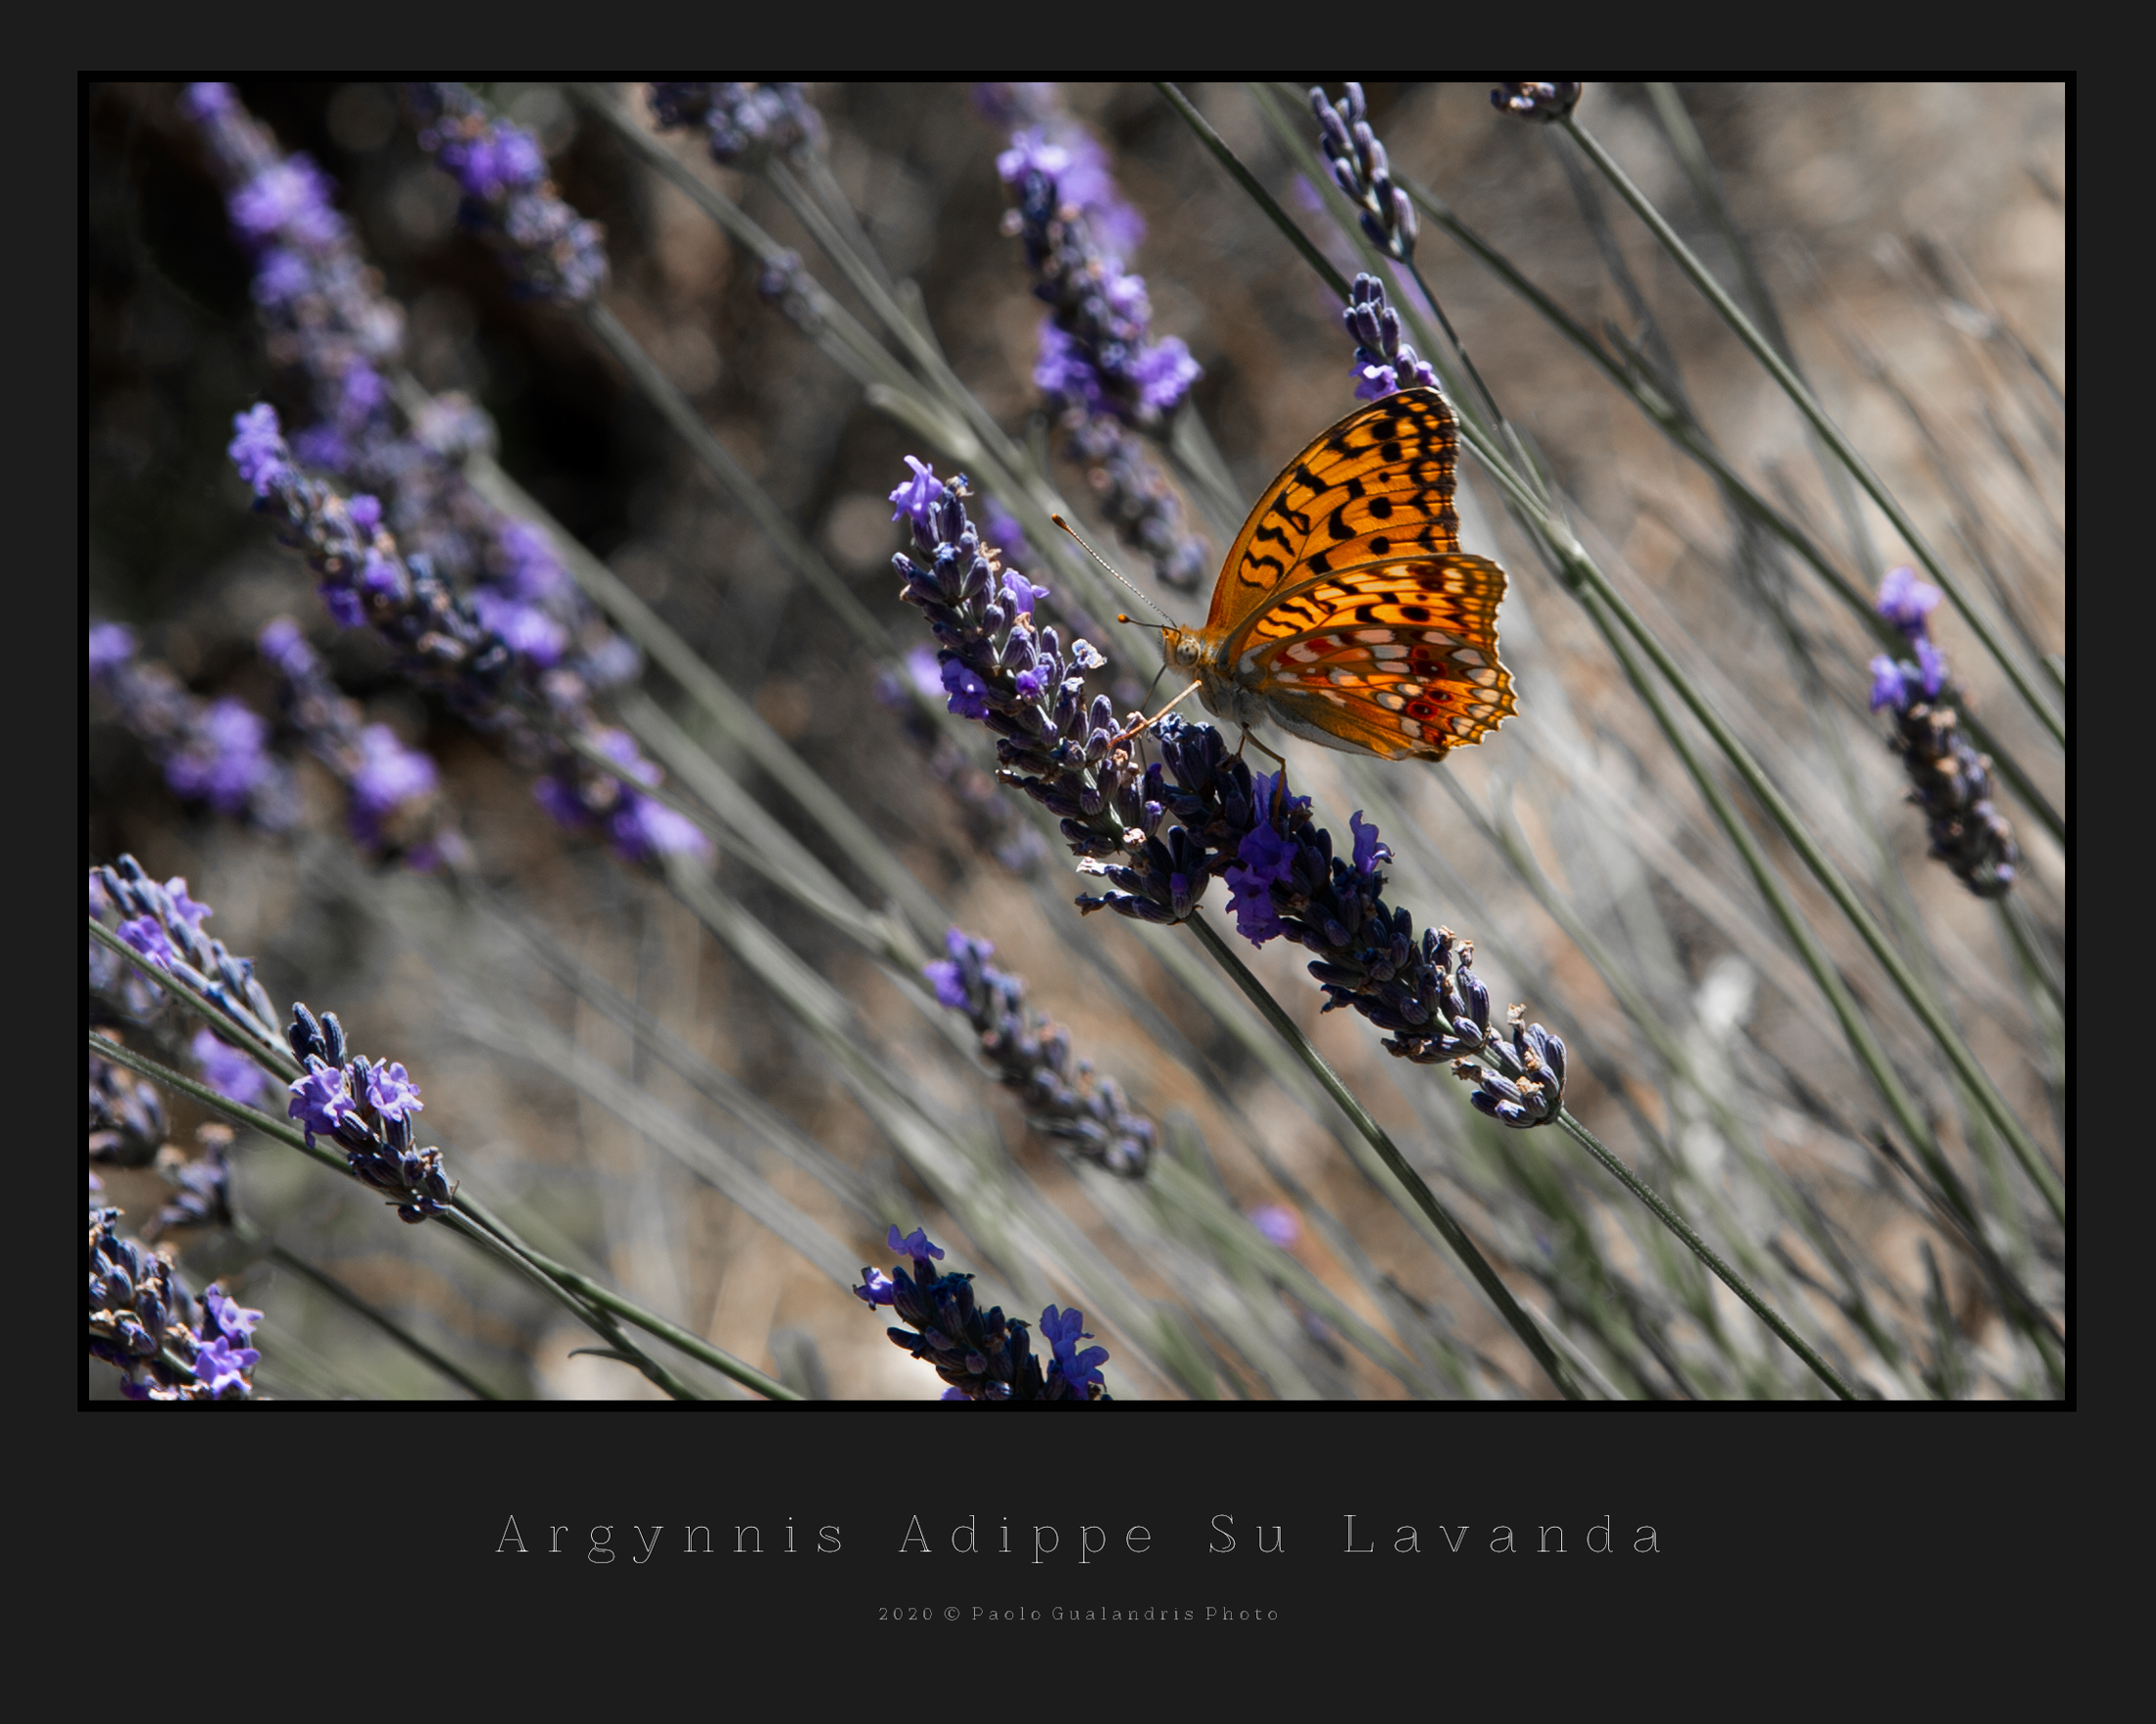 Argynnis Adippe On Lavender...